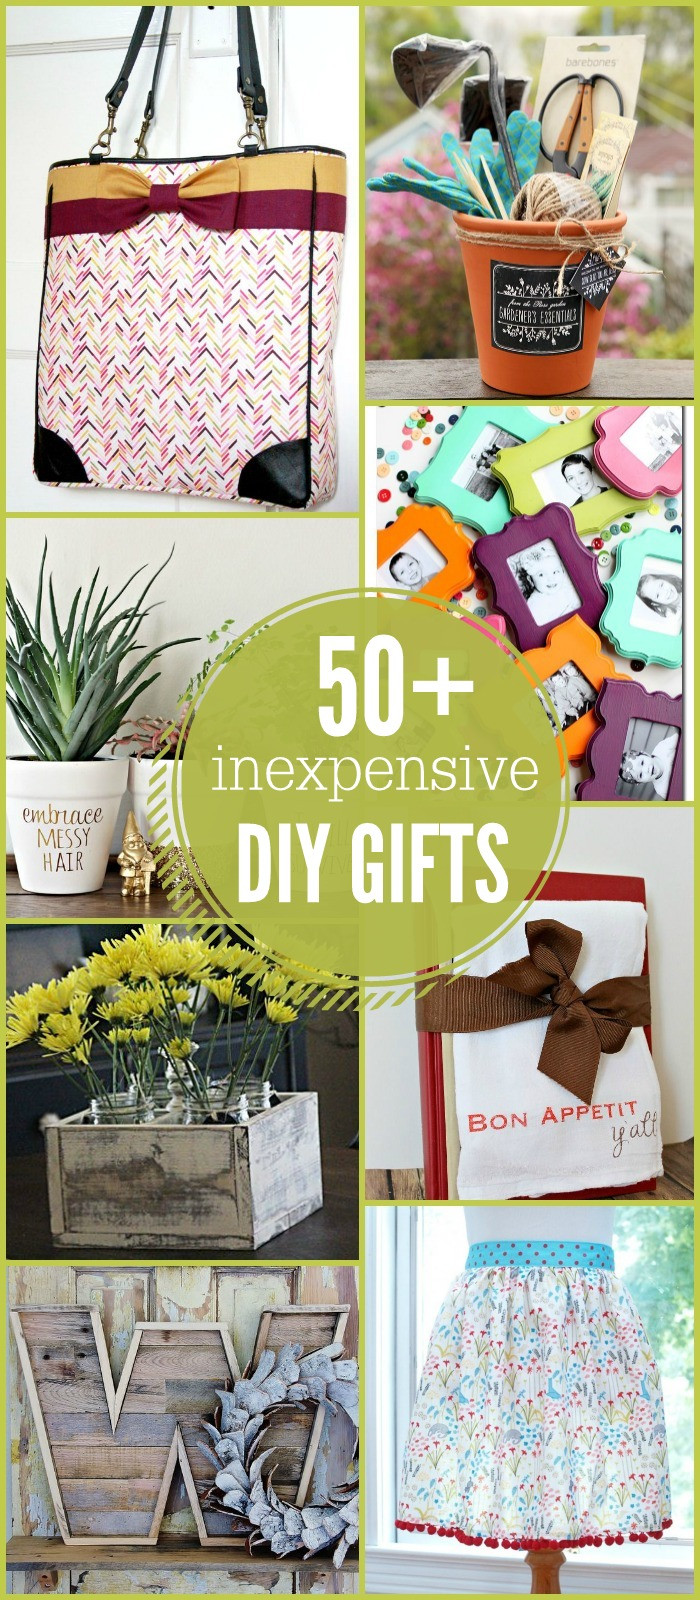 Inexpensive DIY Christmas Gifts
 50 Inexpensive DIY Gift Ideas